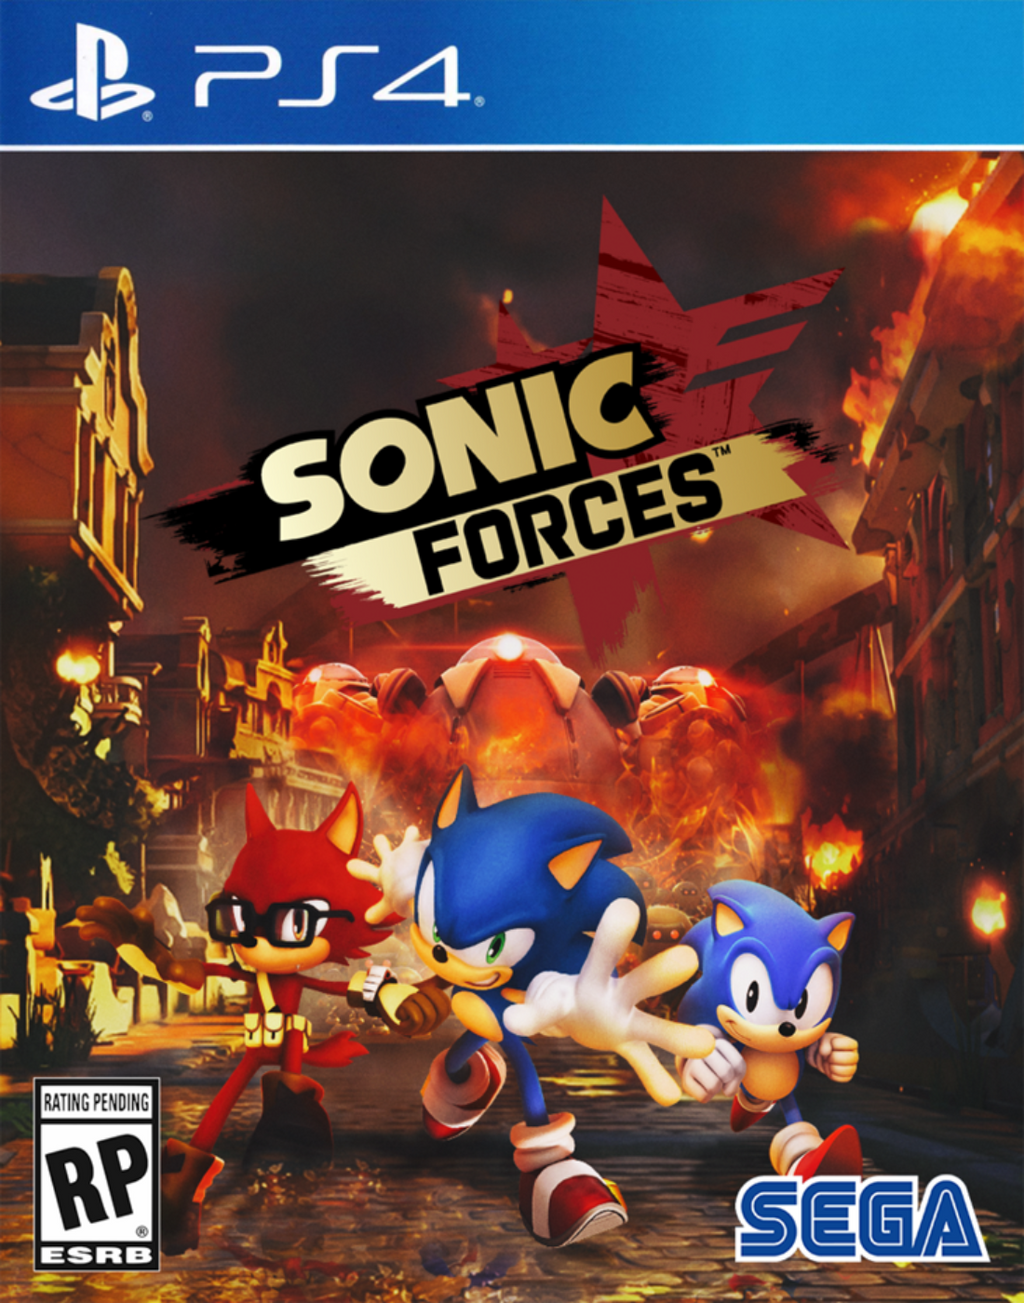 Sonic Forces Bonus Edition - PlayStation 4 | PlayStation 4 | GameStop